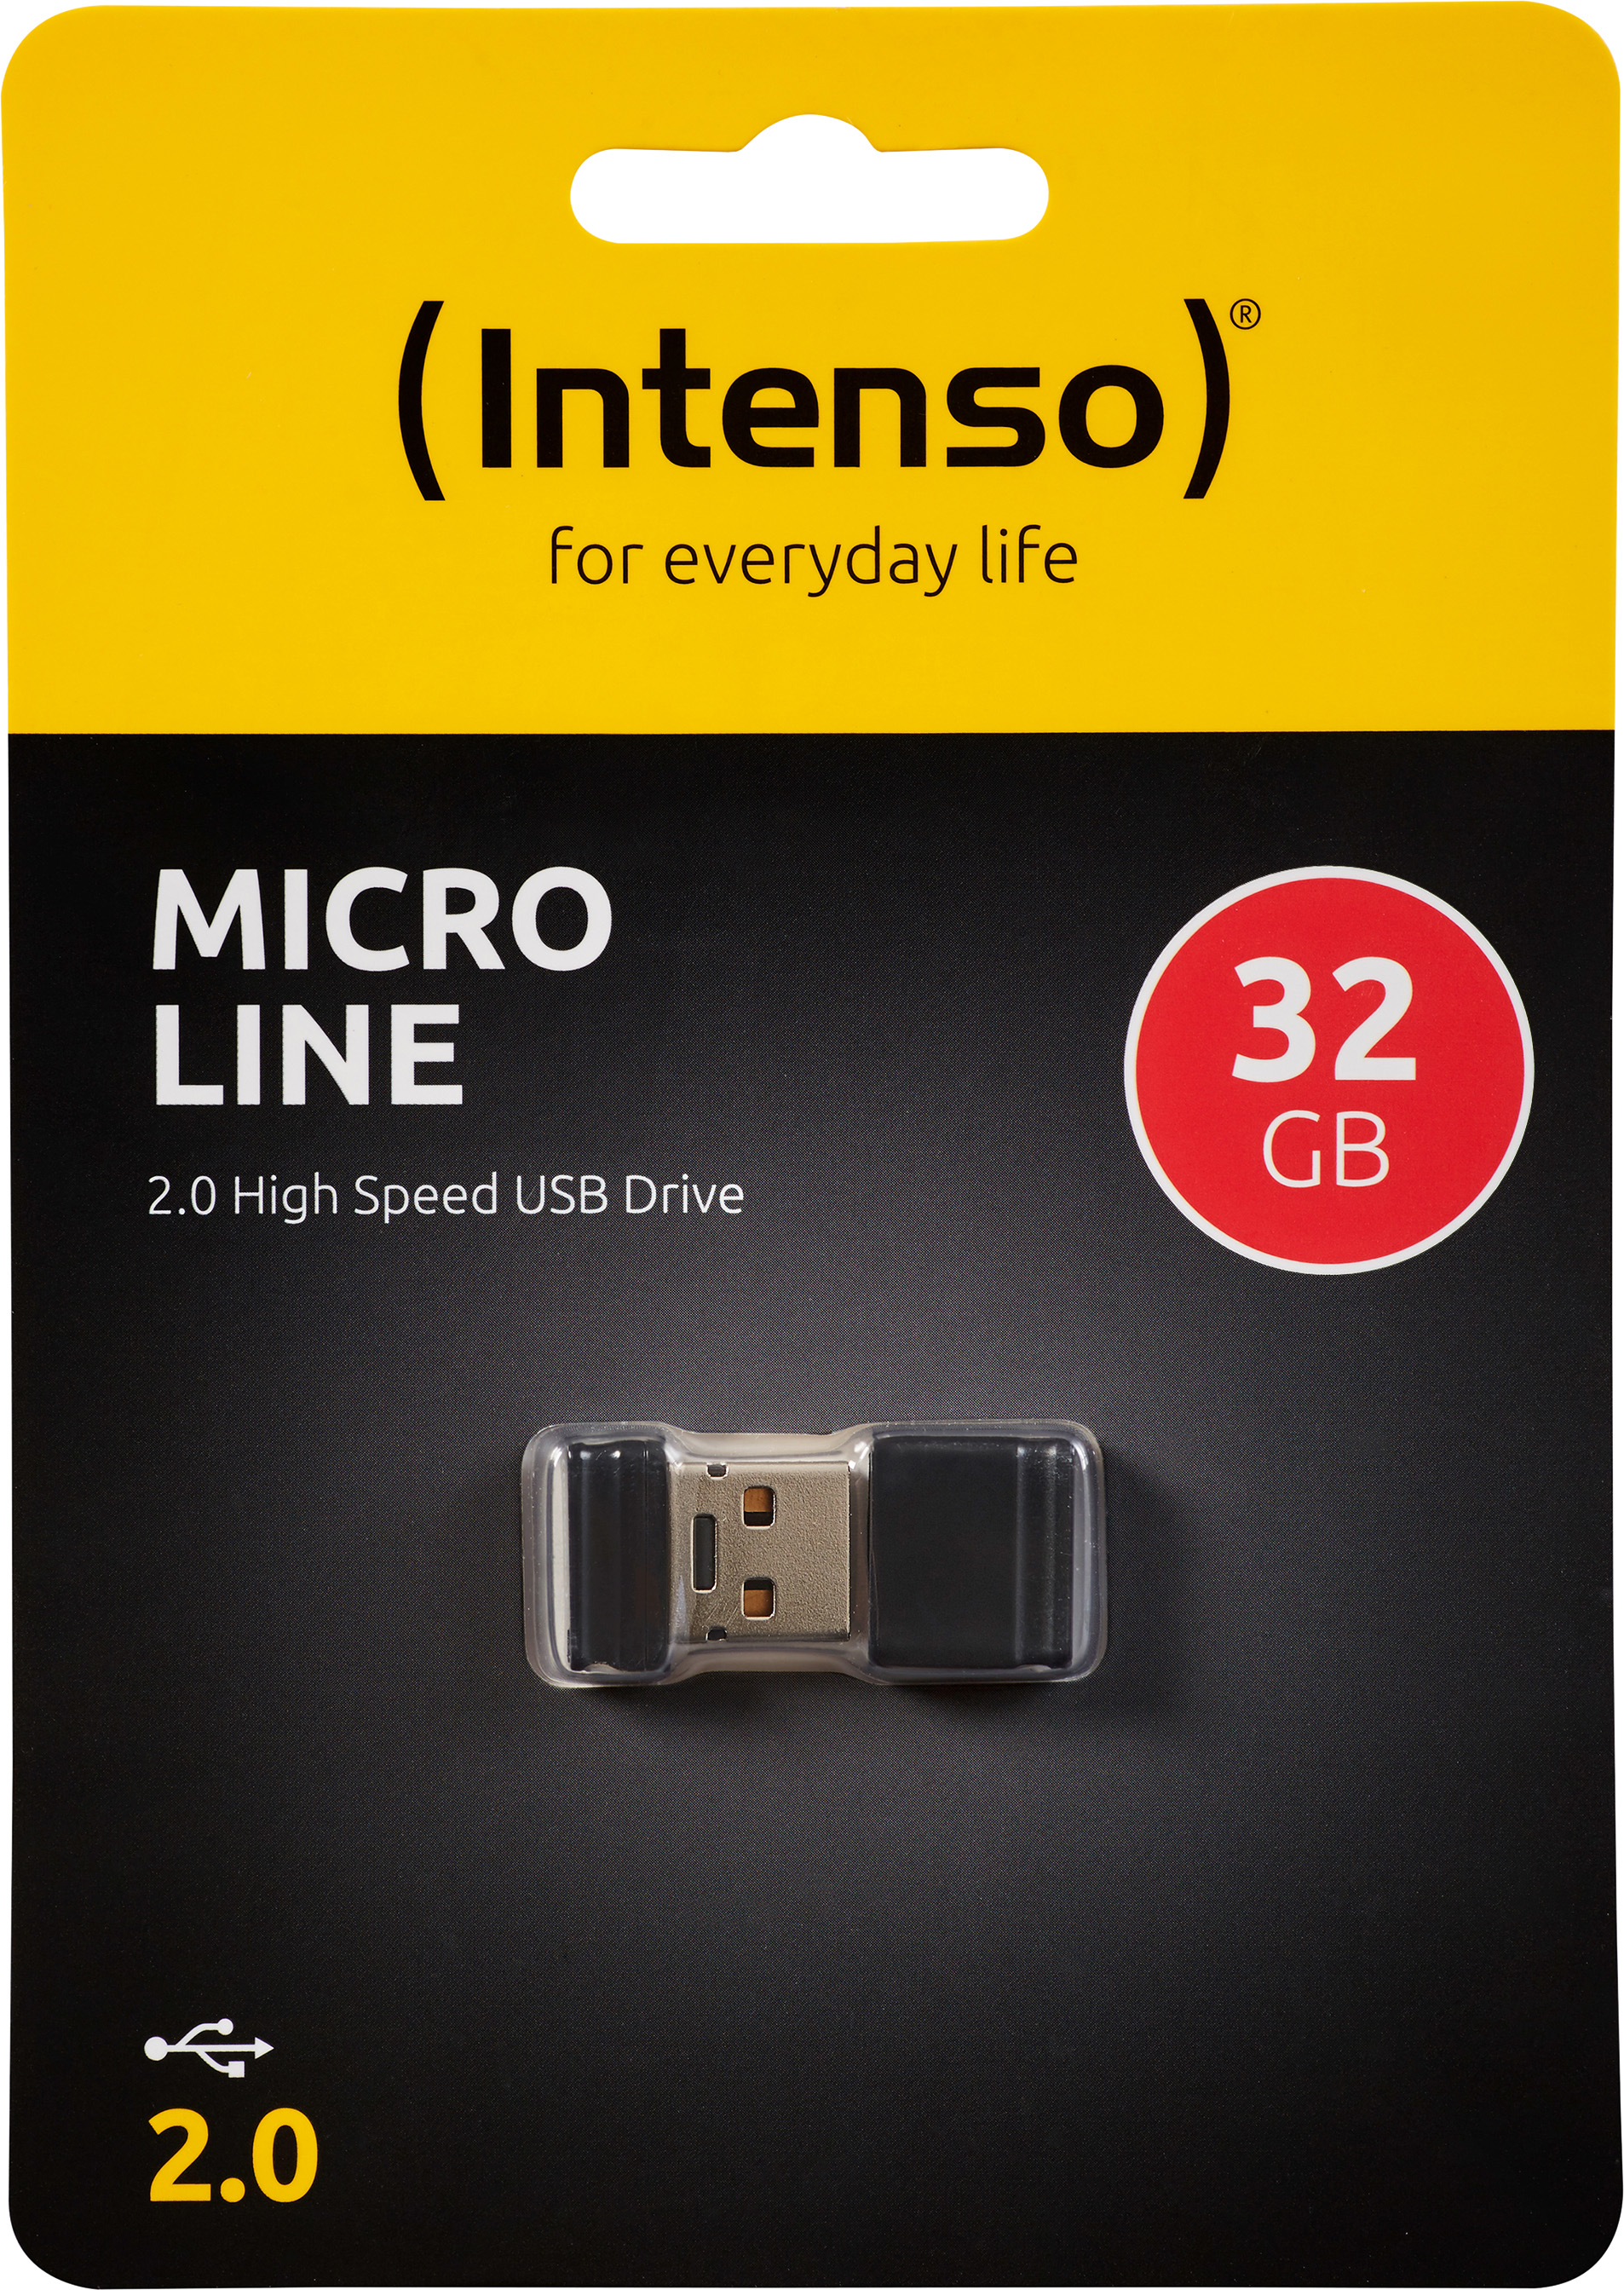 Intenso USB 2.0 Stick 32GB, Micro Line, schwarz (R) 16.5MB/s, (W) 6.5MB/s, Retail-Blister